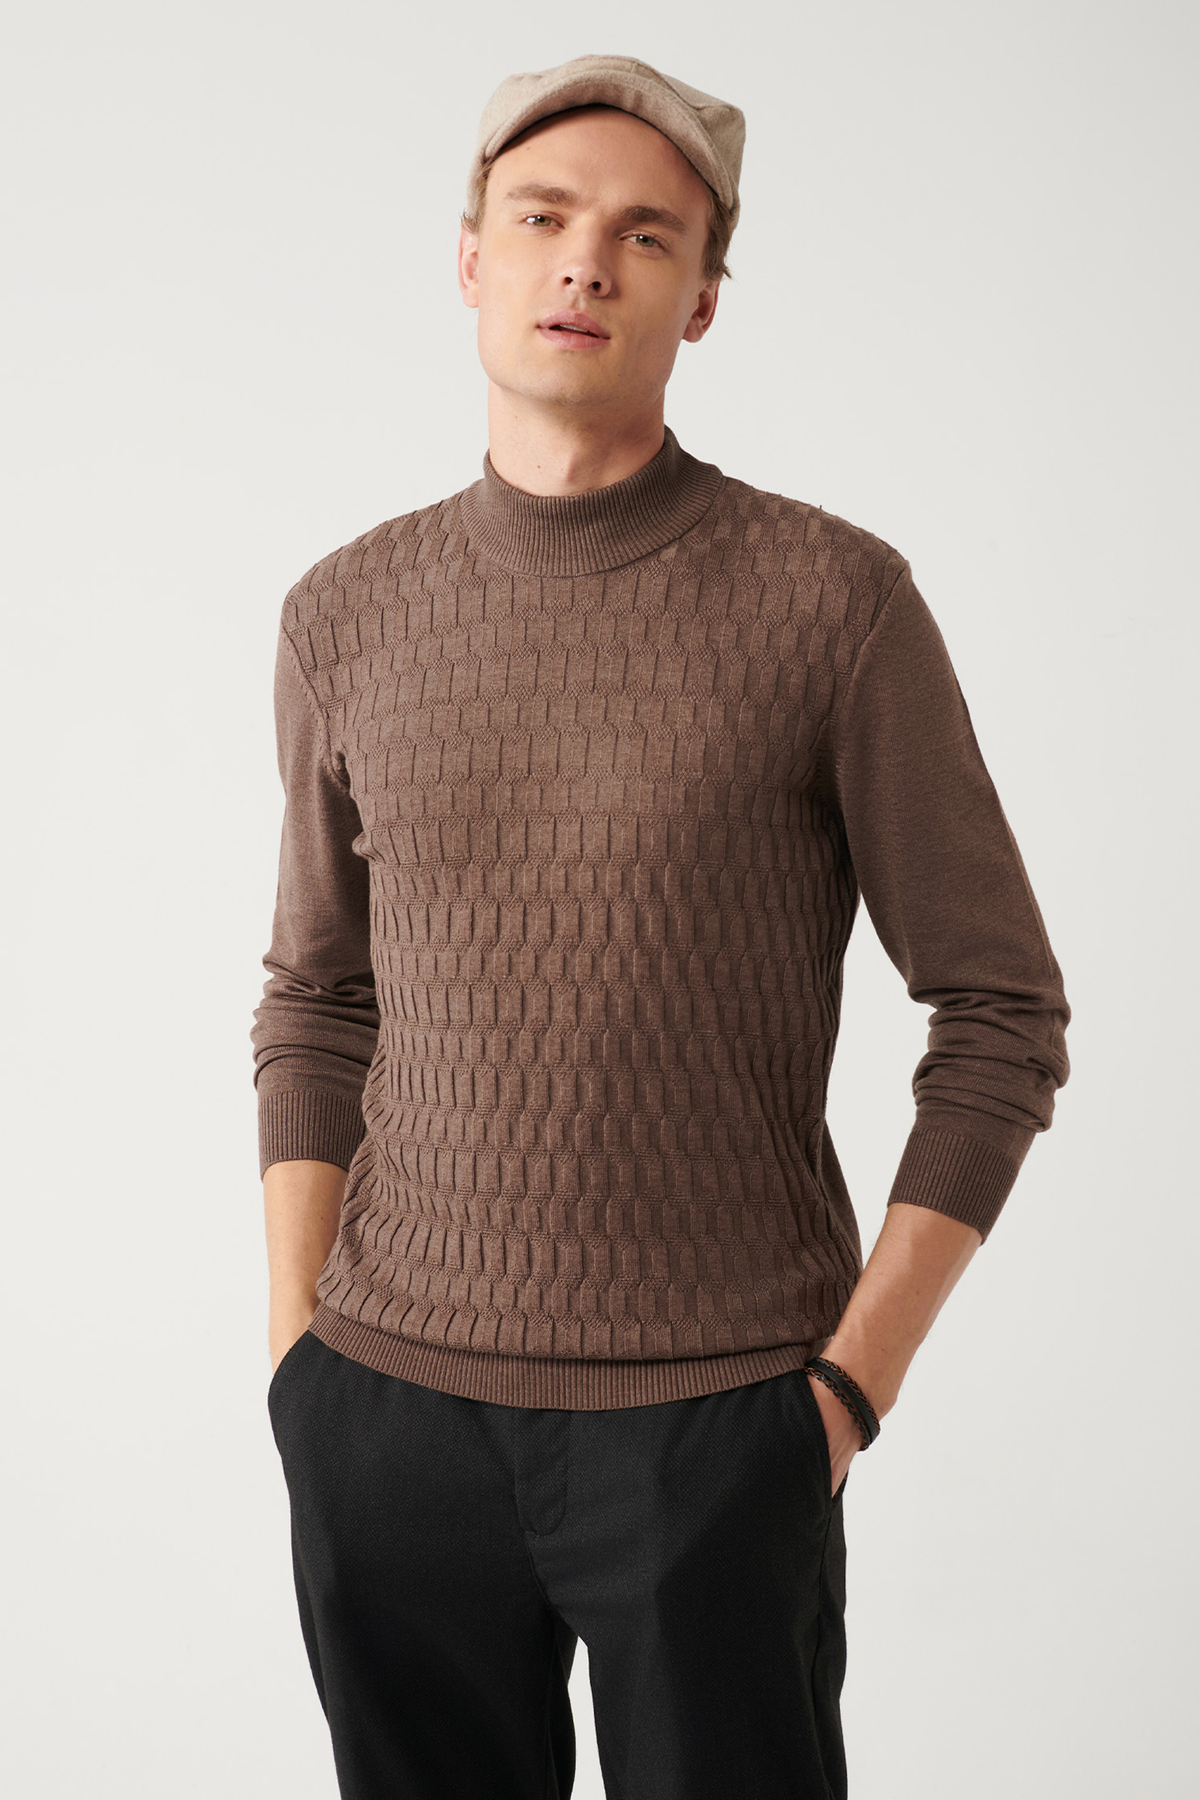 Avva Men's Light Brown Knitwear Sweater Half Turtleneck Front Textured Cotton Regular Fit